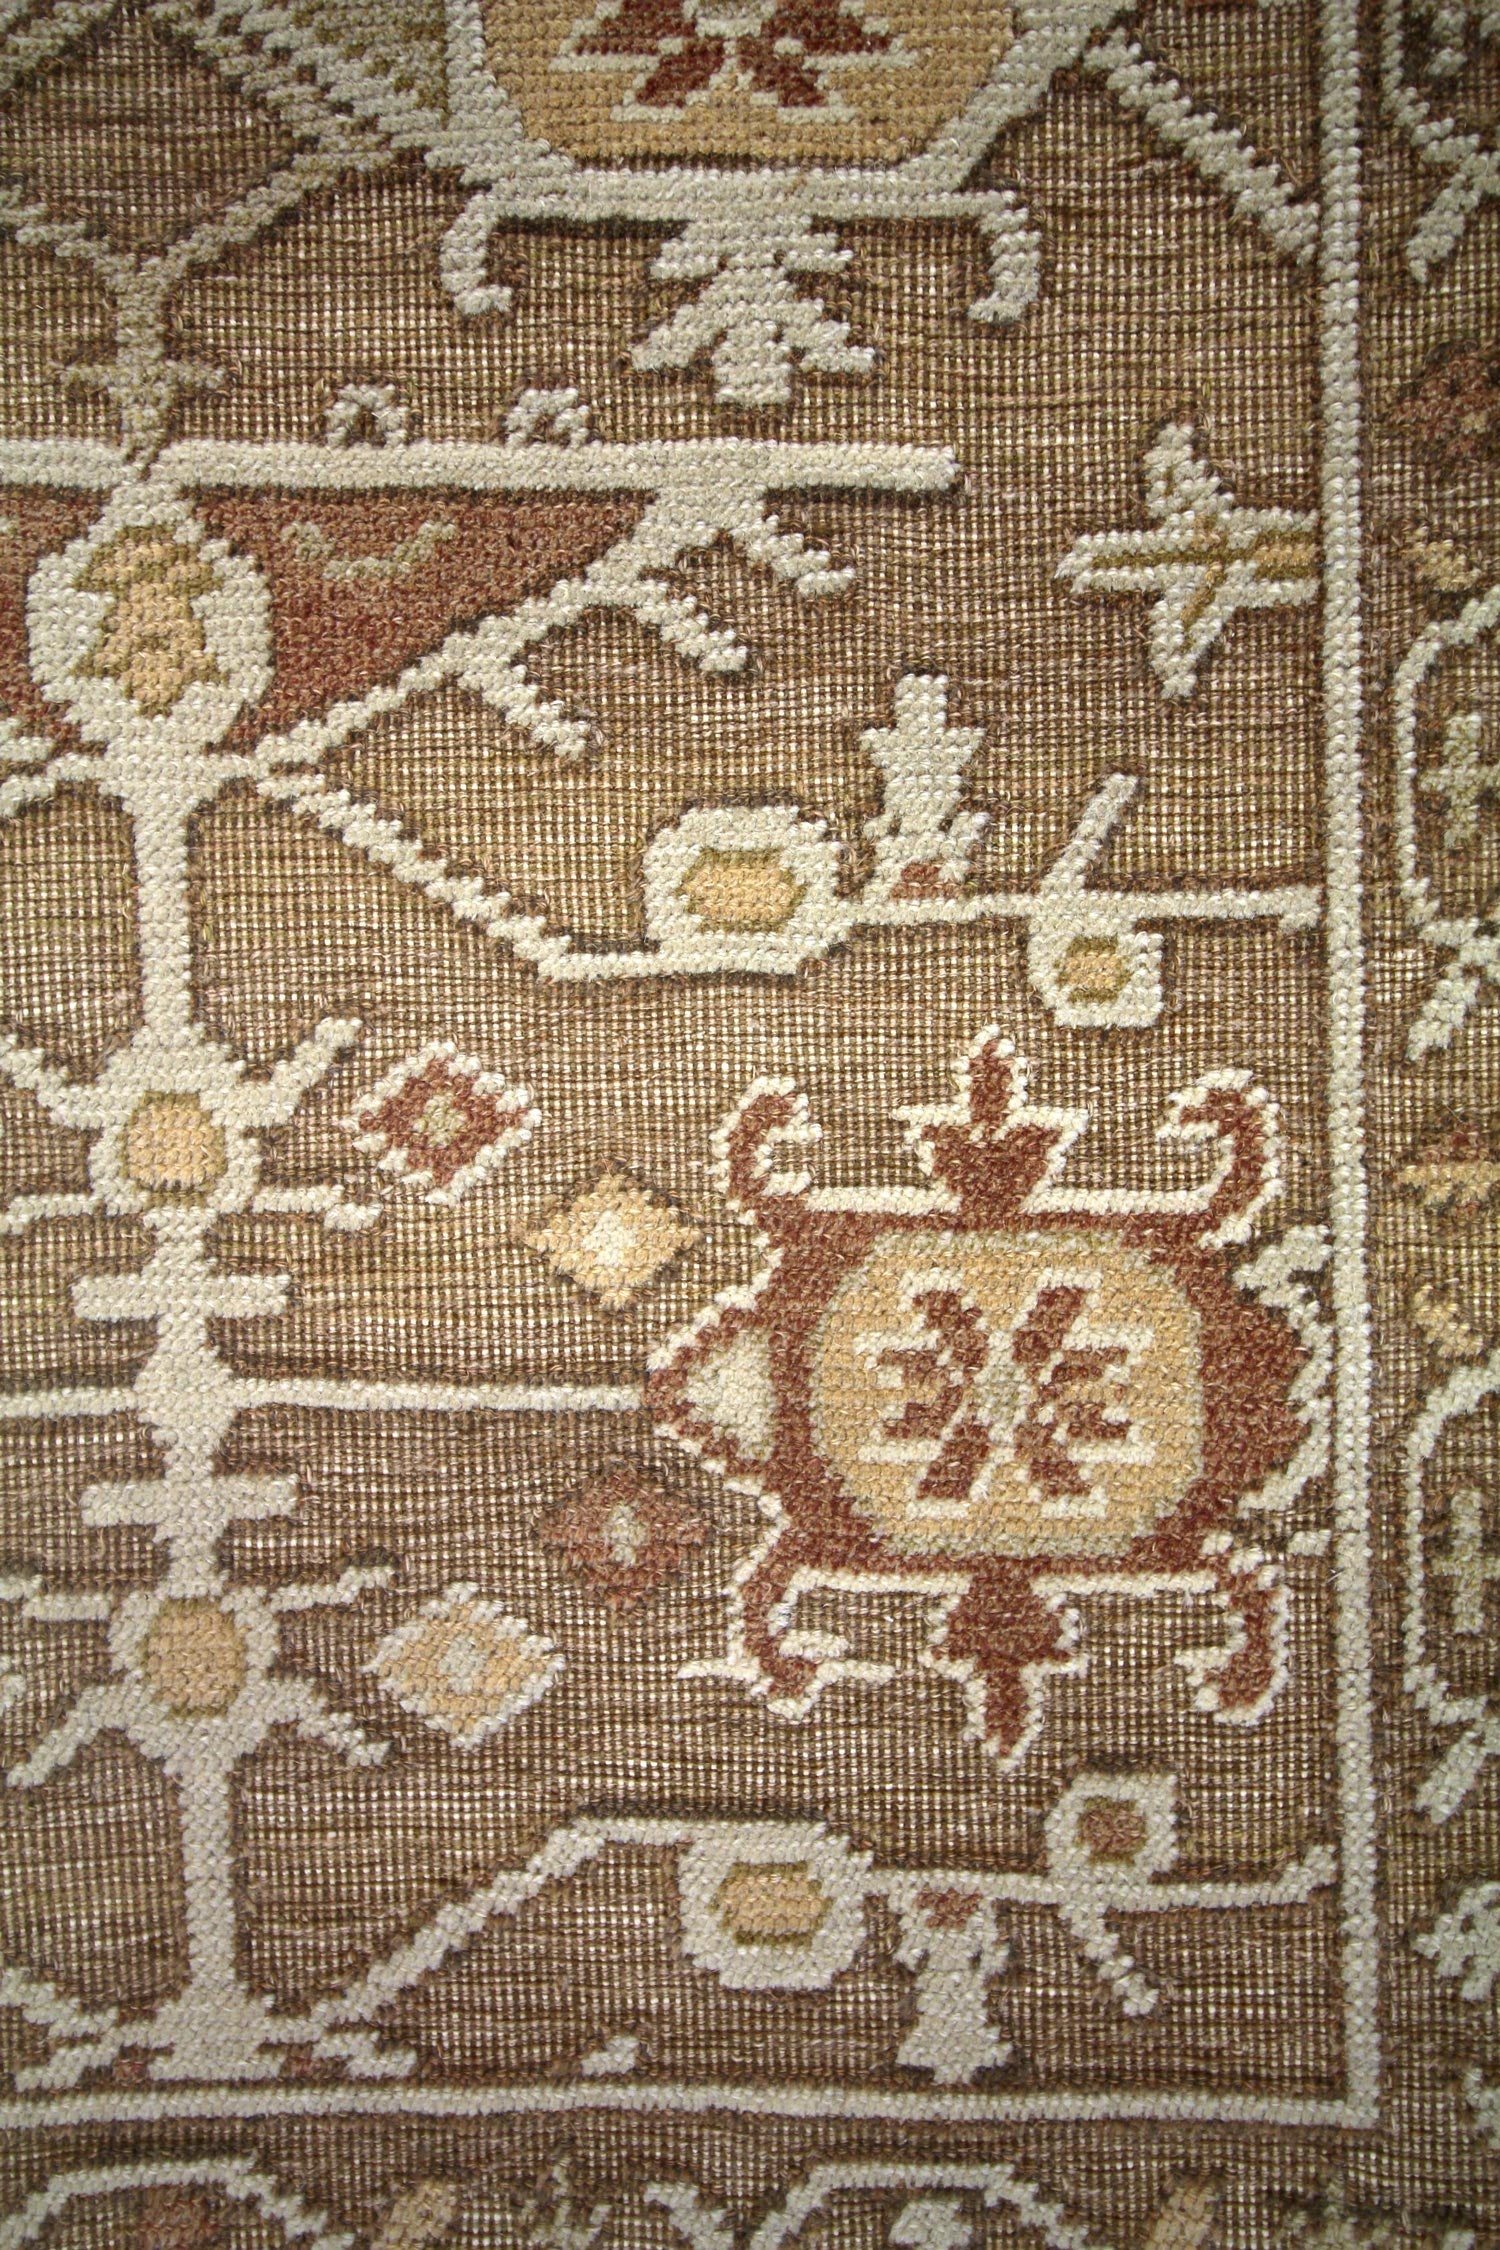 Spanish Cuenca Handwoven Traditional Rug, J63353